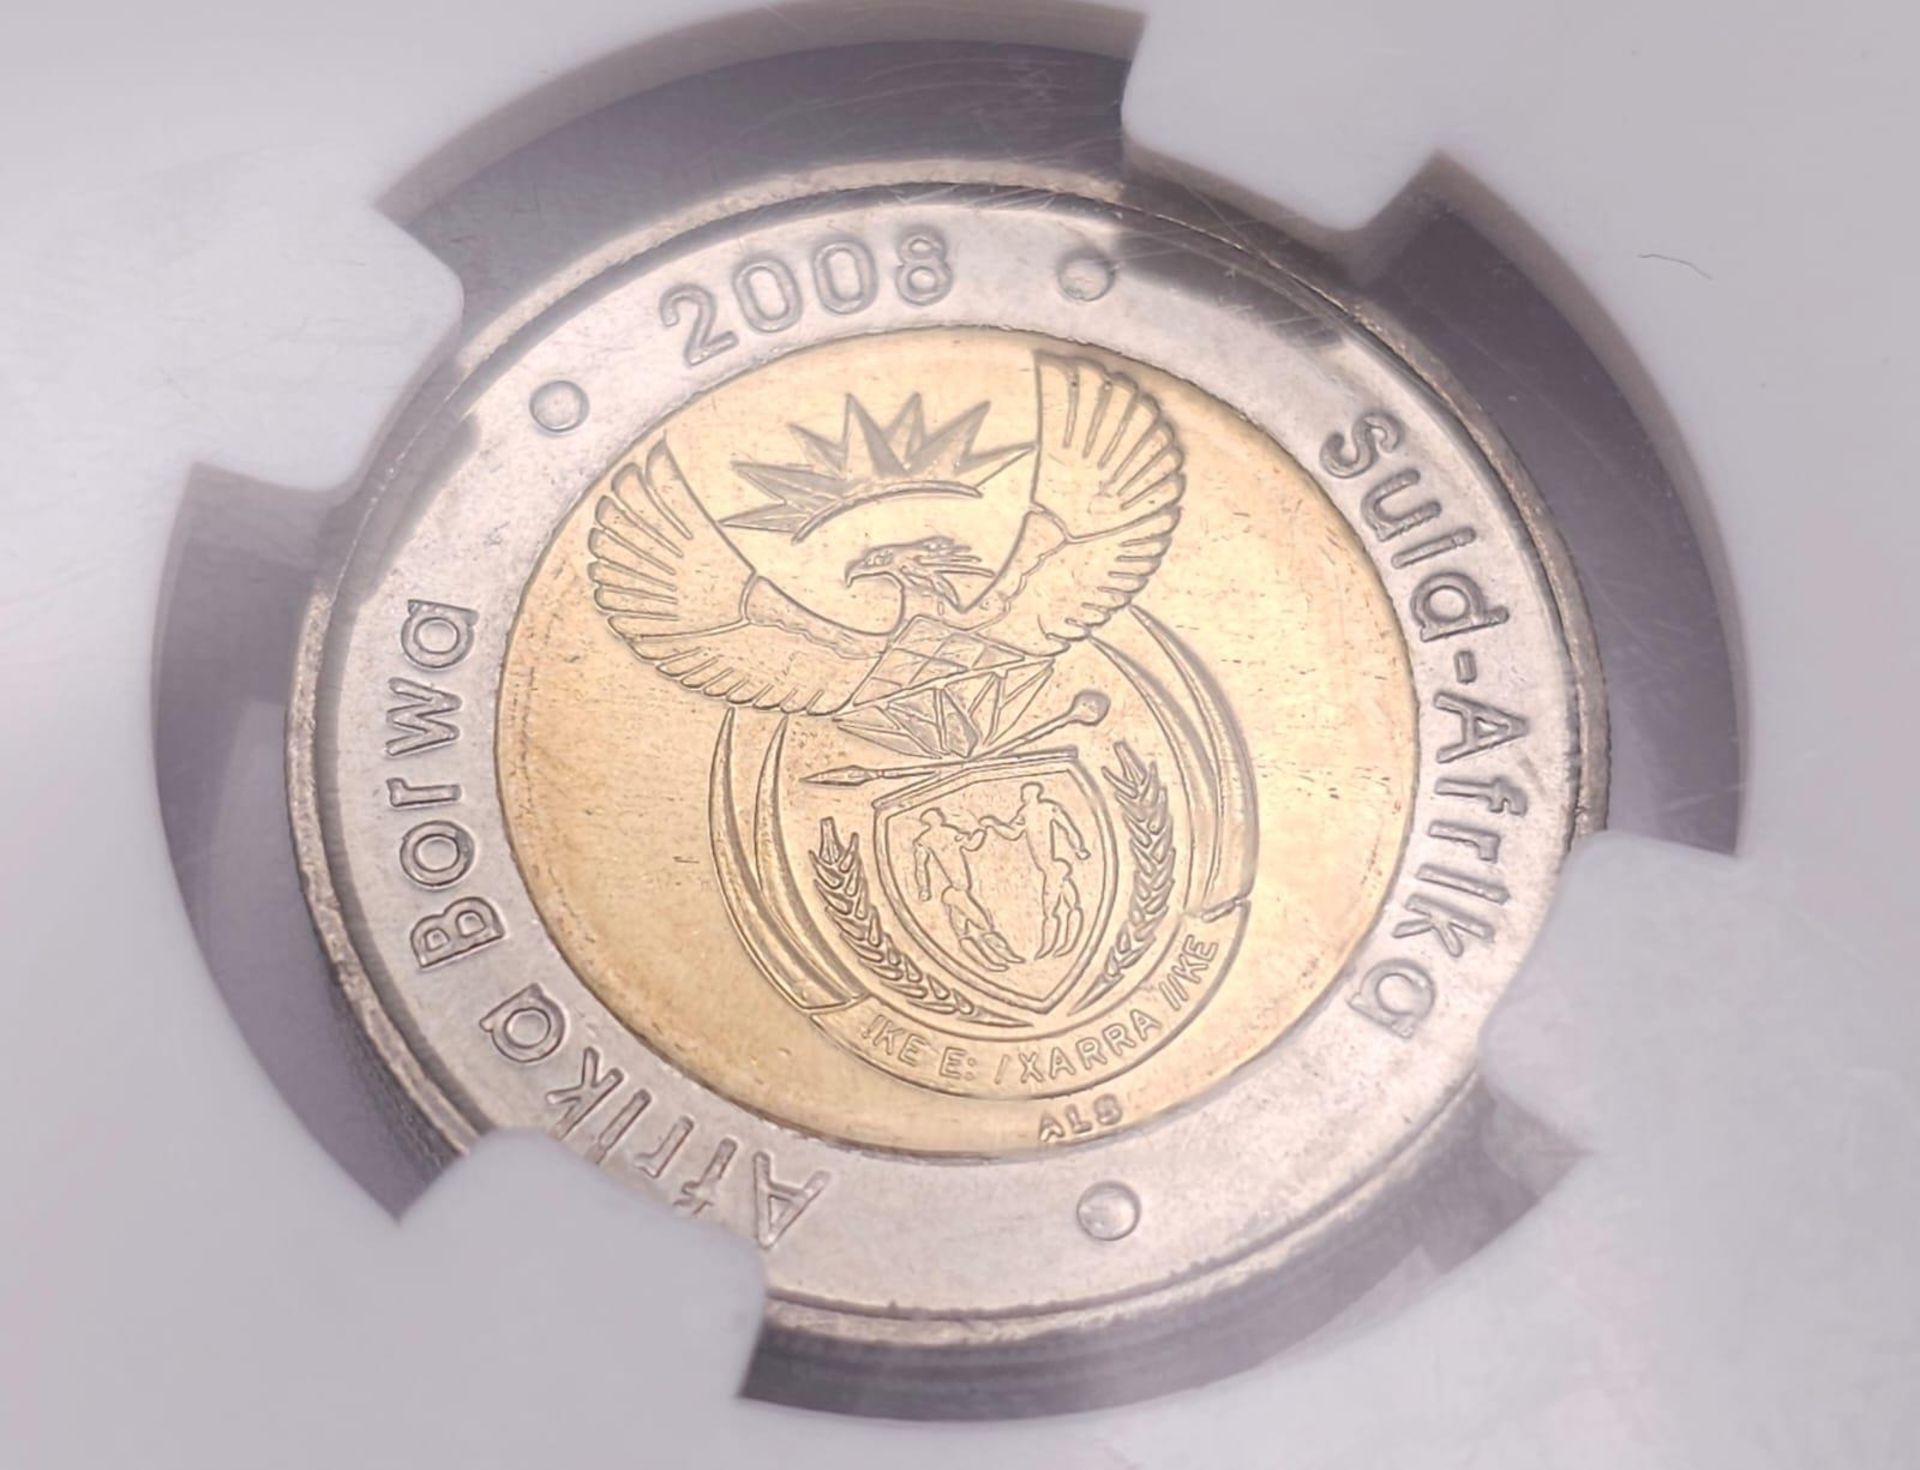 A 2008 MANDELA 90th BIRTHDAY COMMEMORATIVE COIN IN PRESENTATATION CAPSULE . - Image 8 of 9